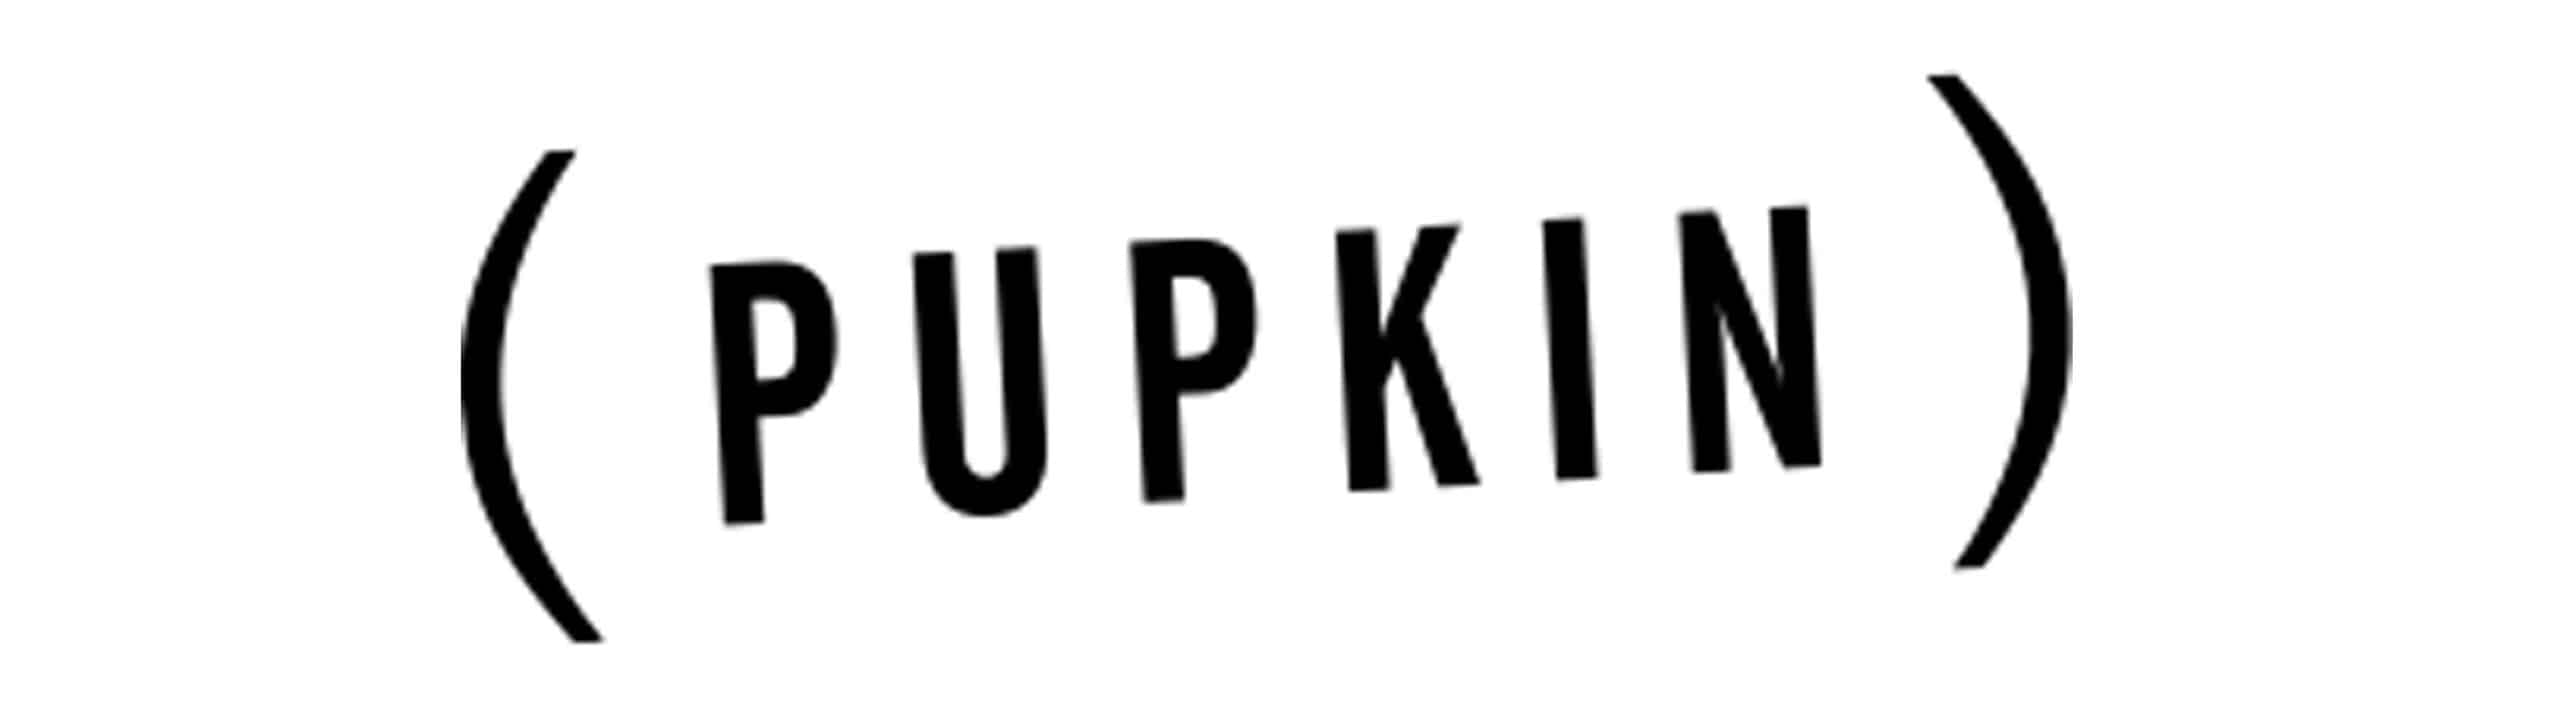 Pupkin-logo